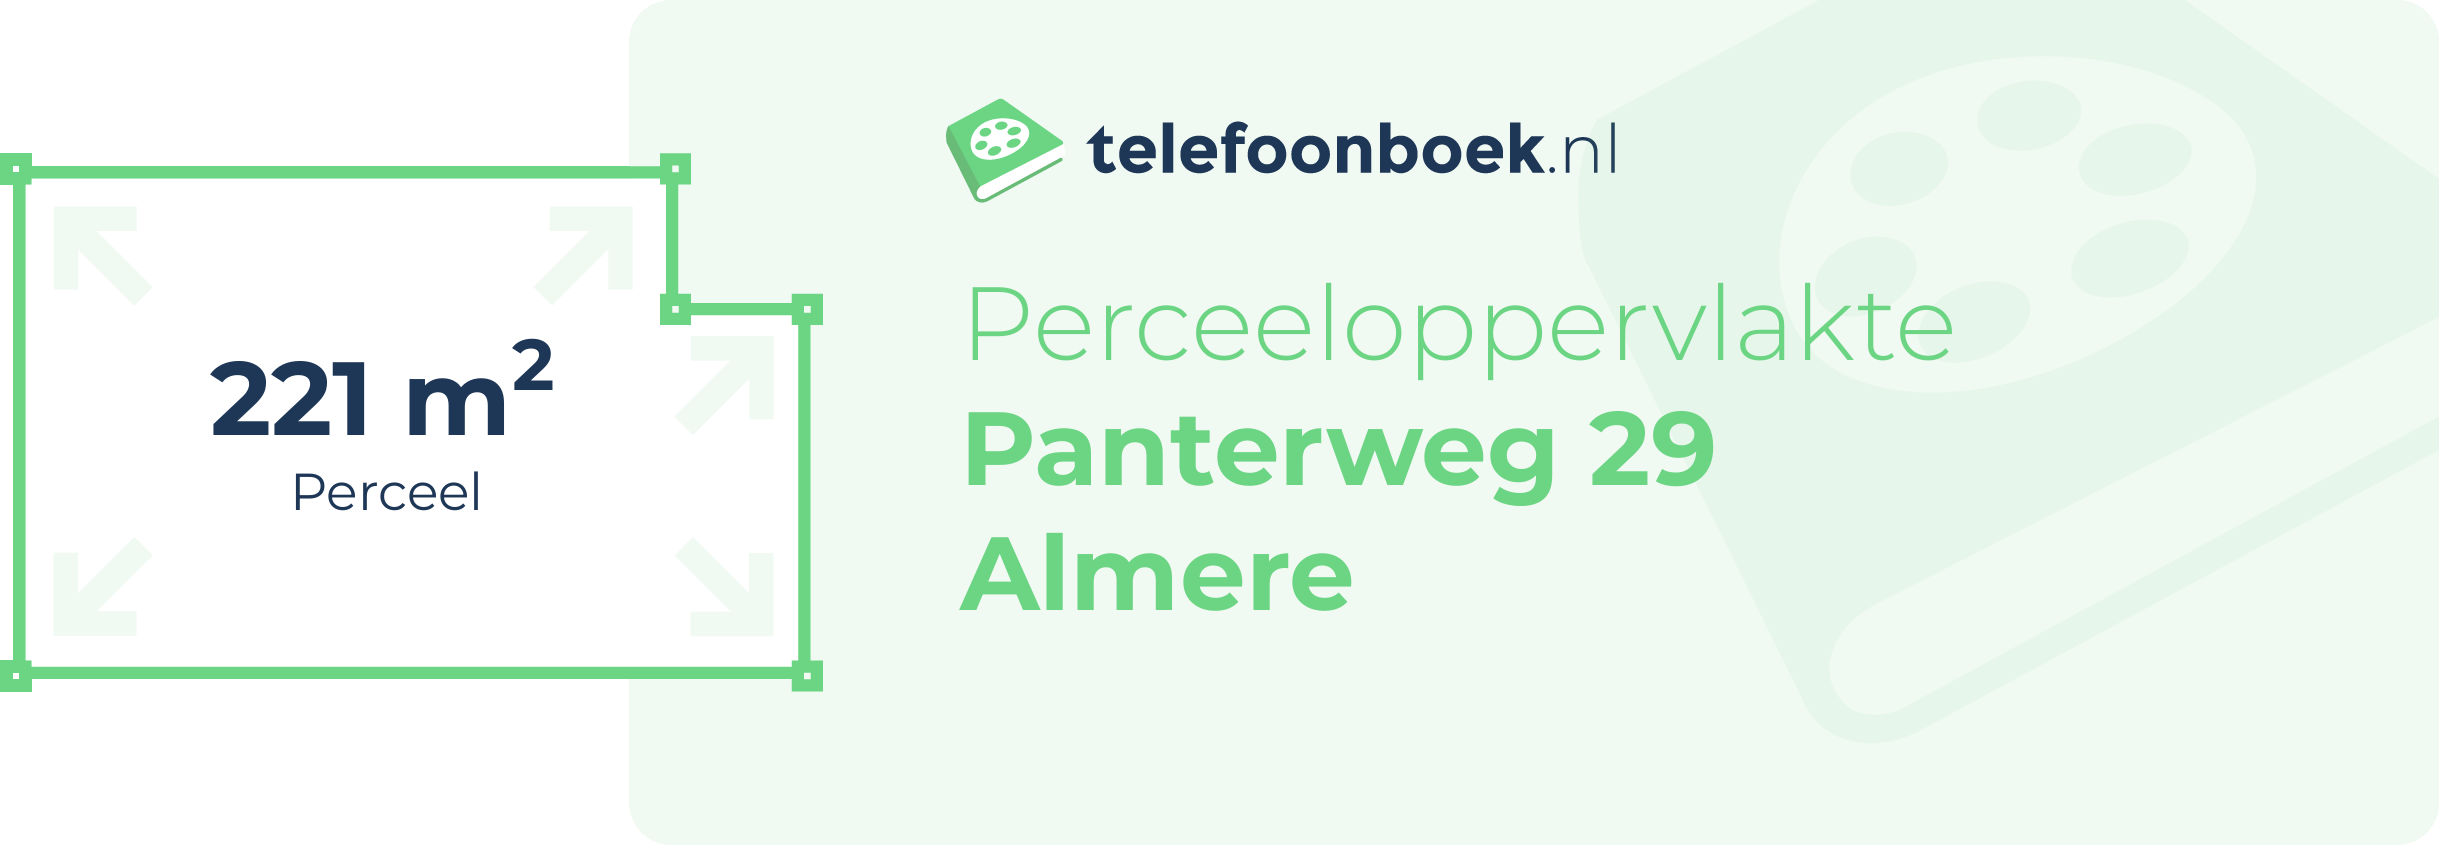 Perceeloppervlakte Panterweg 29 Almere